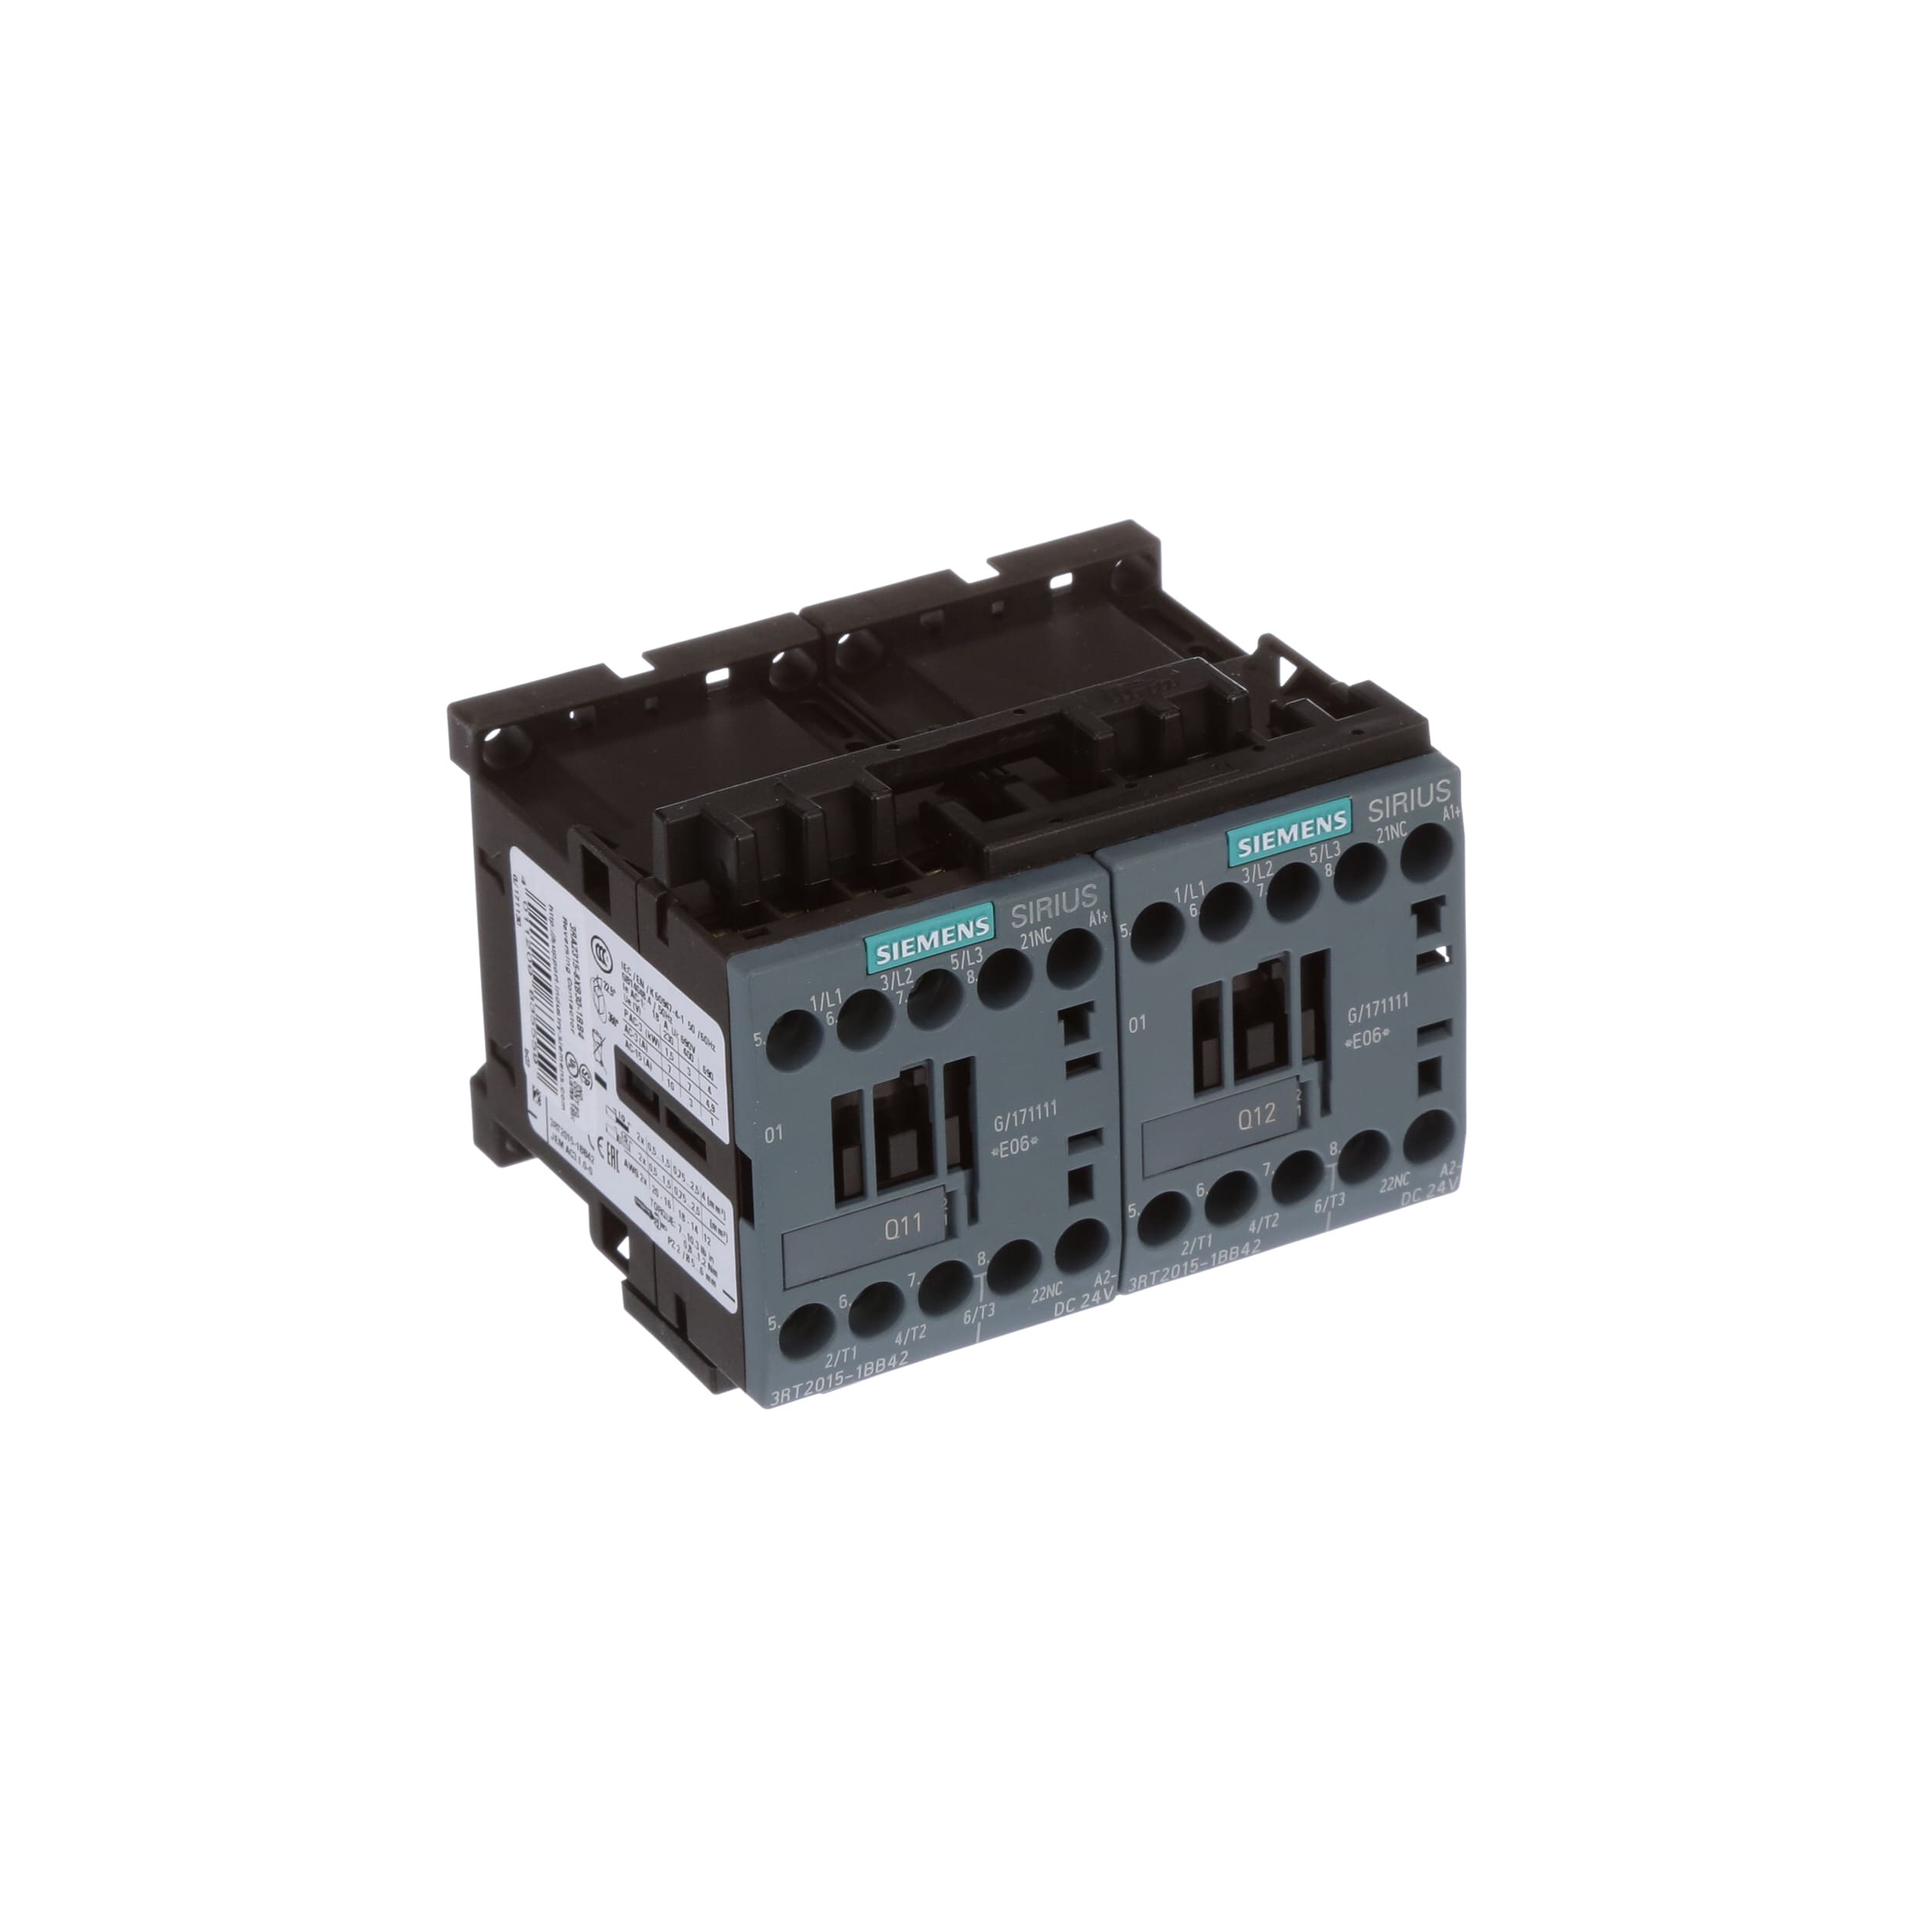 Siemens 3RA1315-8XB30-1BB4 Reversing Contactor Relay 24 VDC Coils 3RV1011-1AA10 